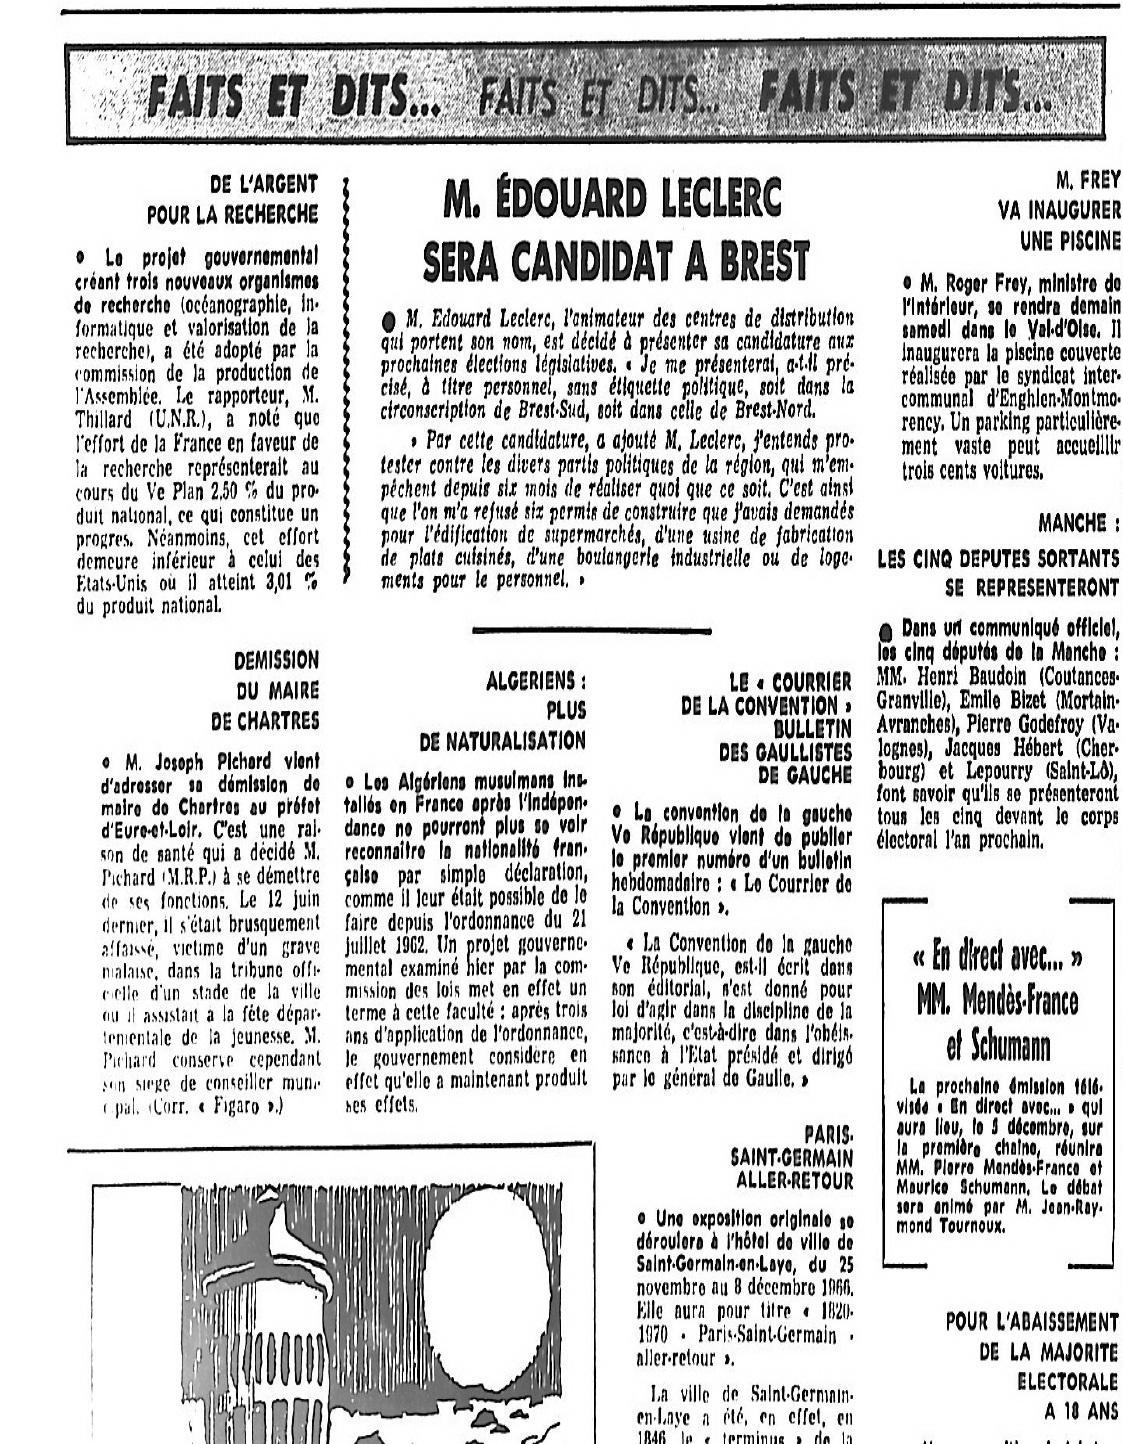 Edouard Leclerc sera candidat à Brest (Le Figaro, 1966)